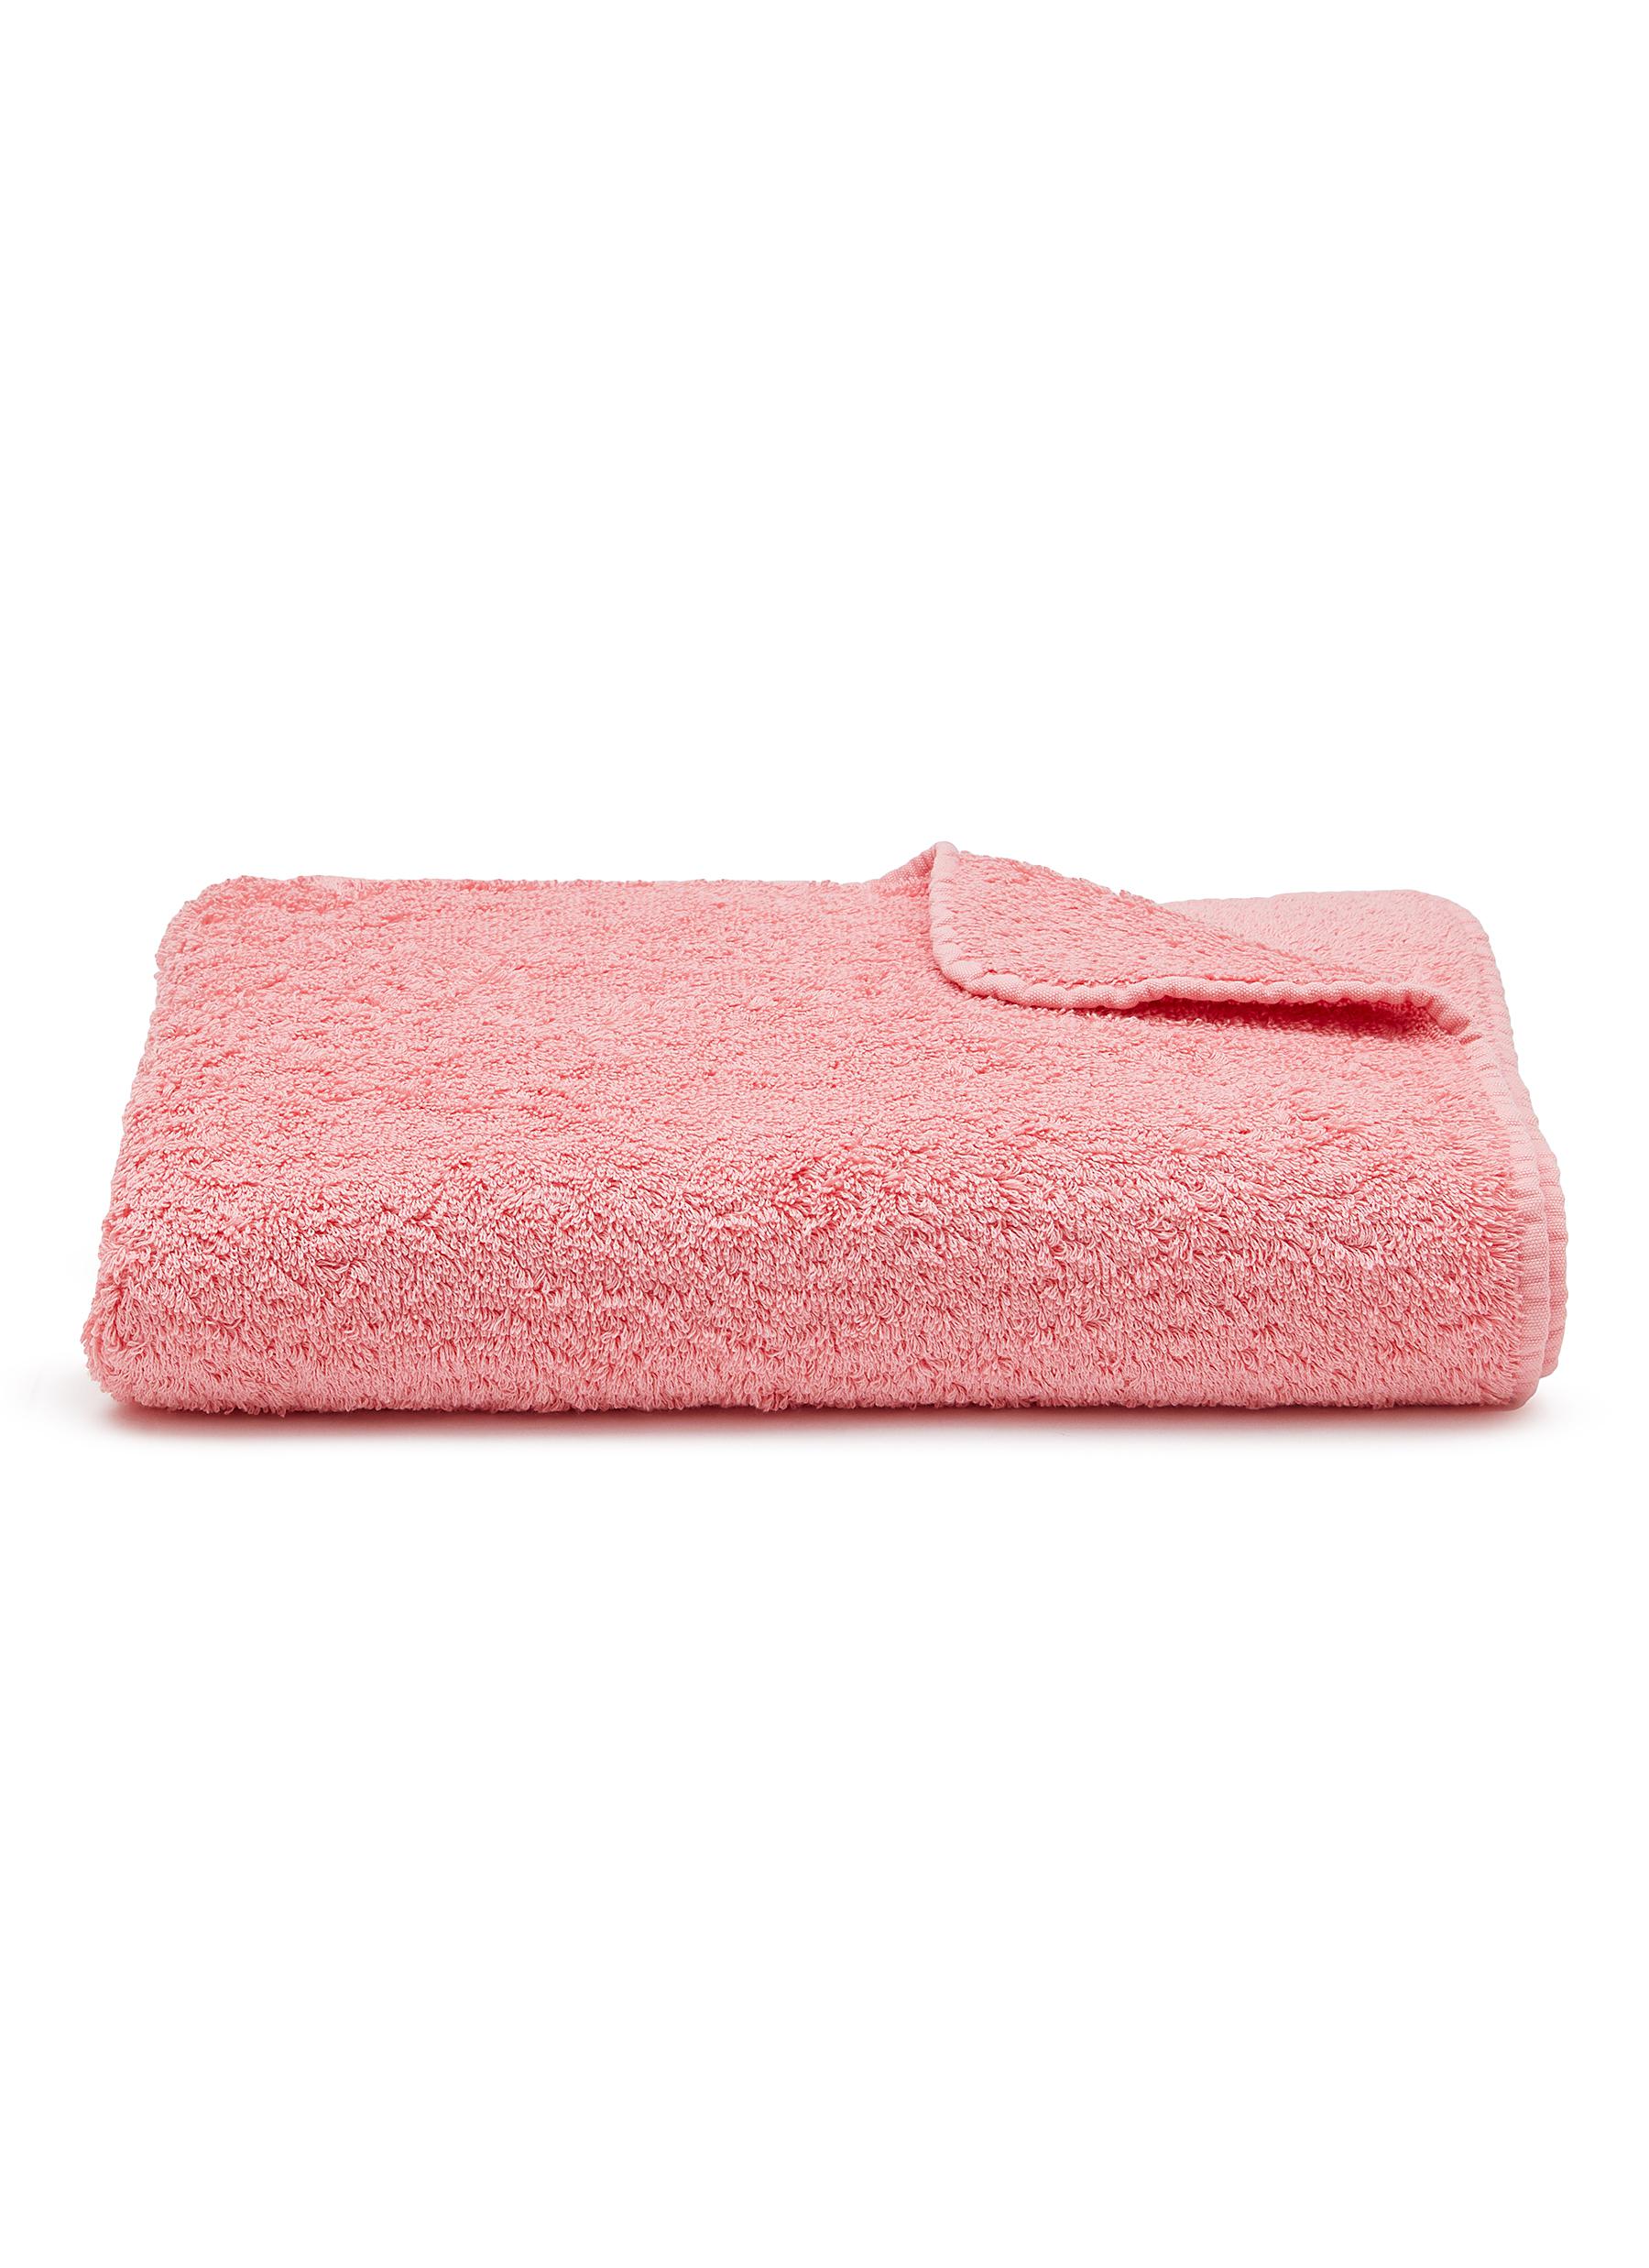 Abyss Super Pile Towels | Flamingo